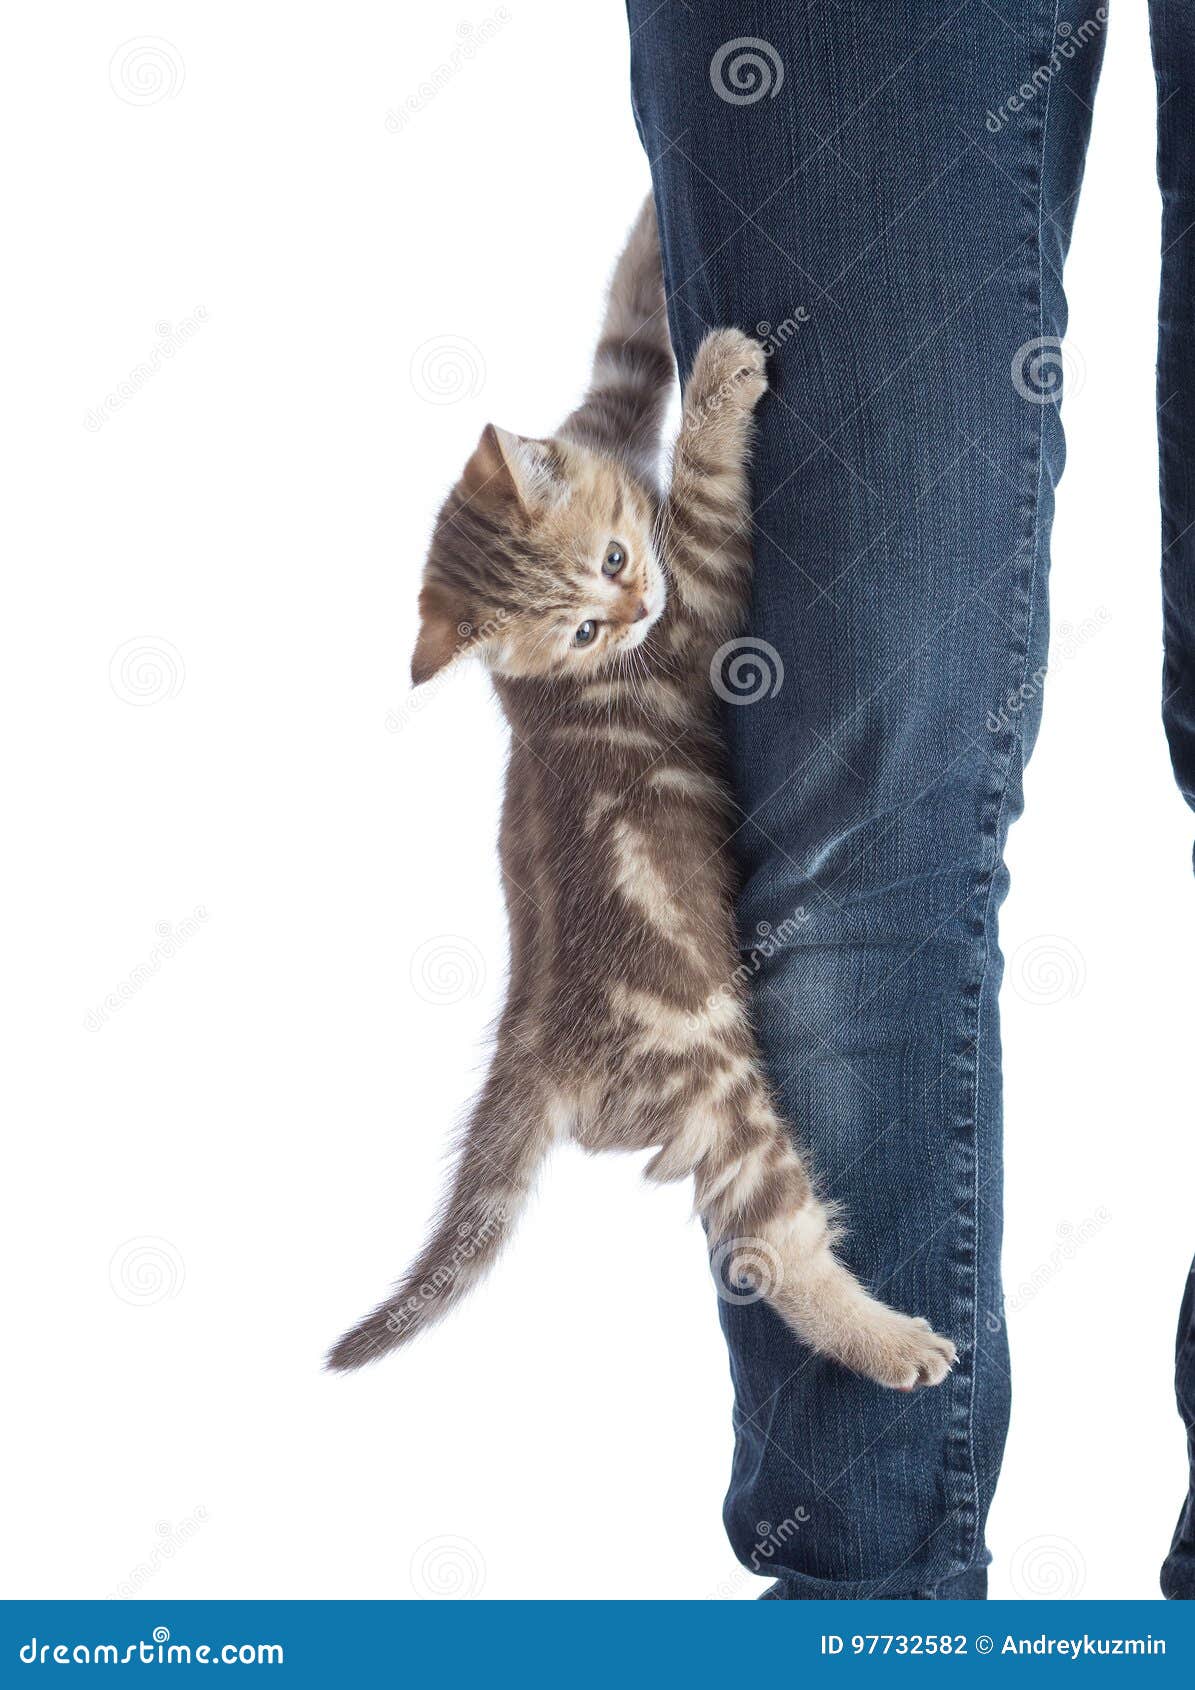 frightened kitten cat hanging on human leg